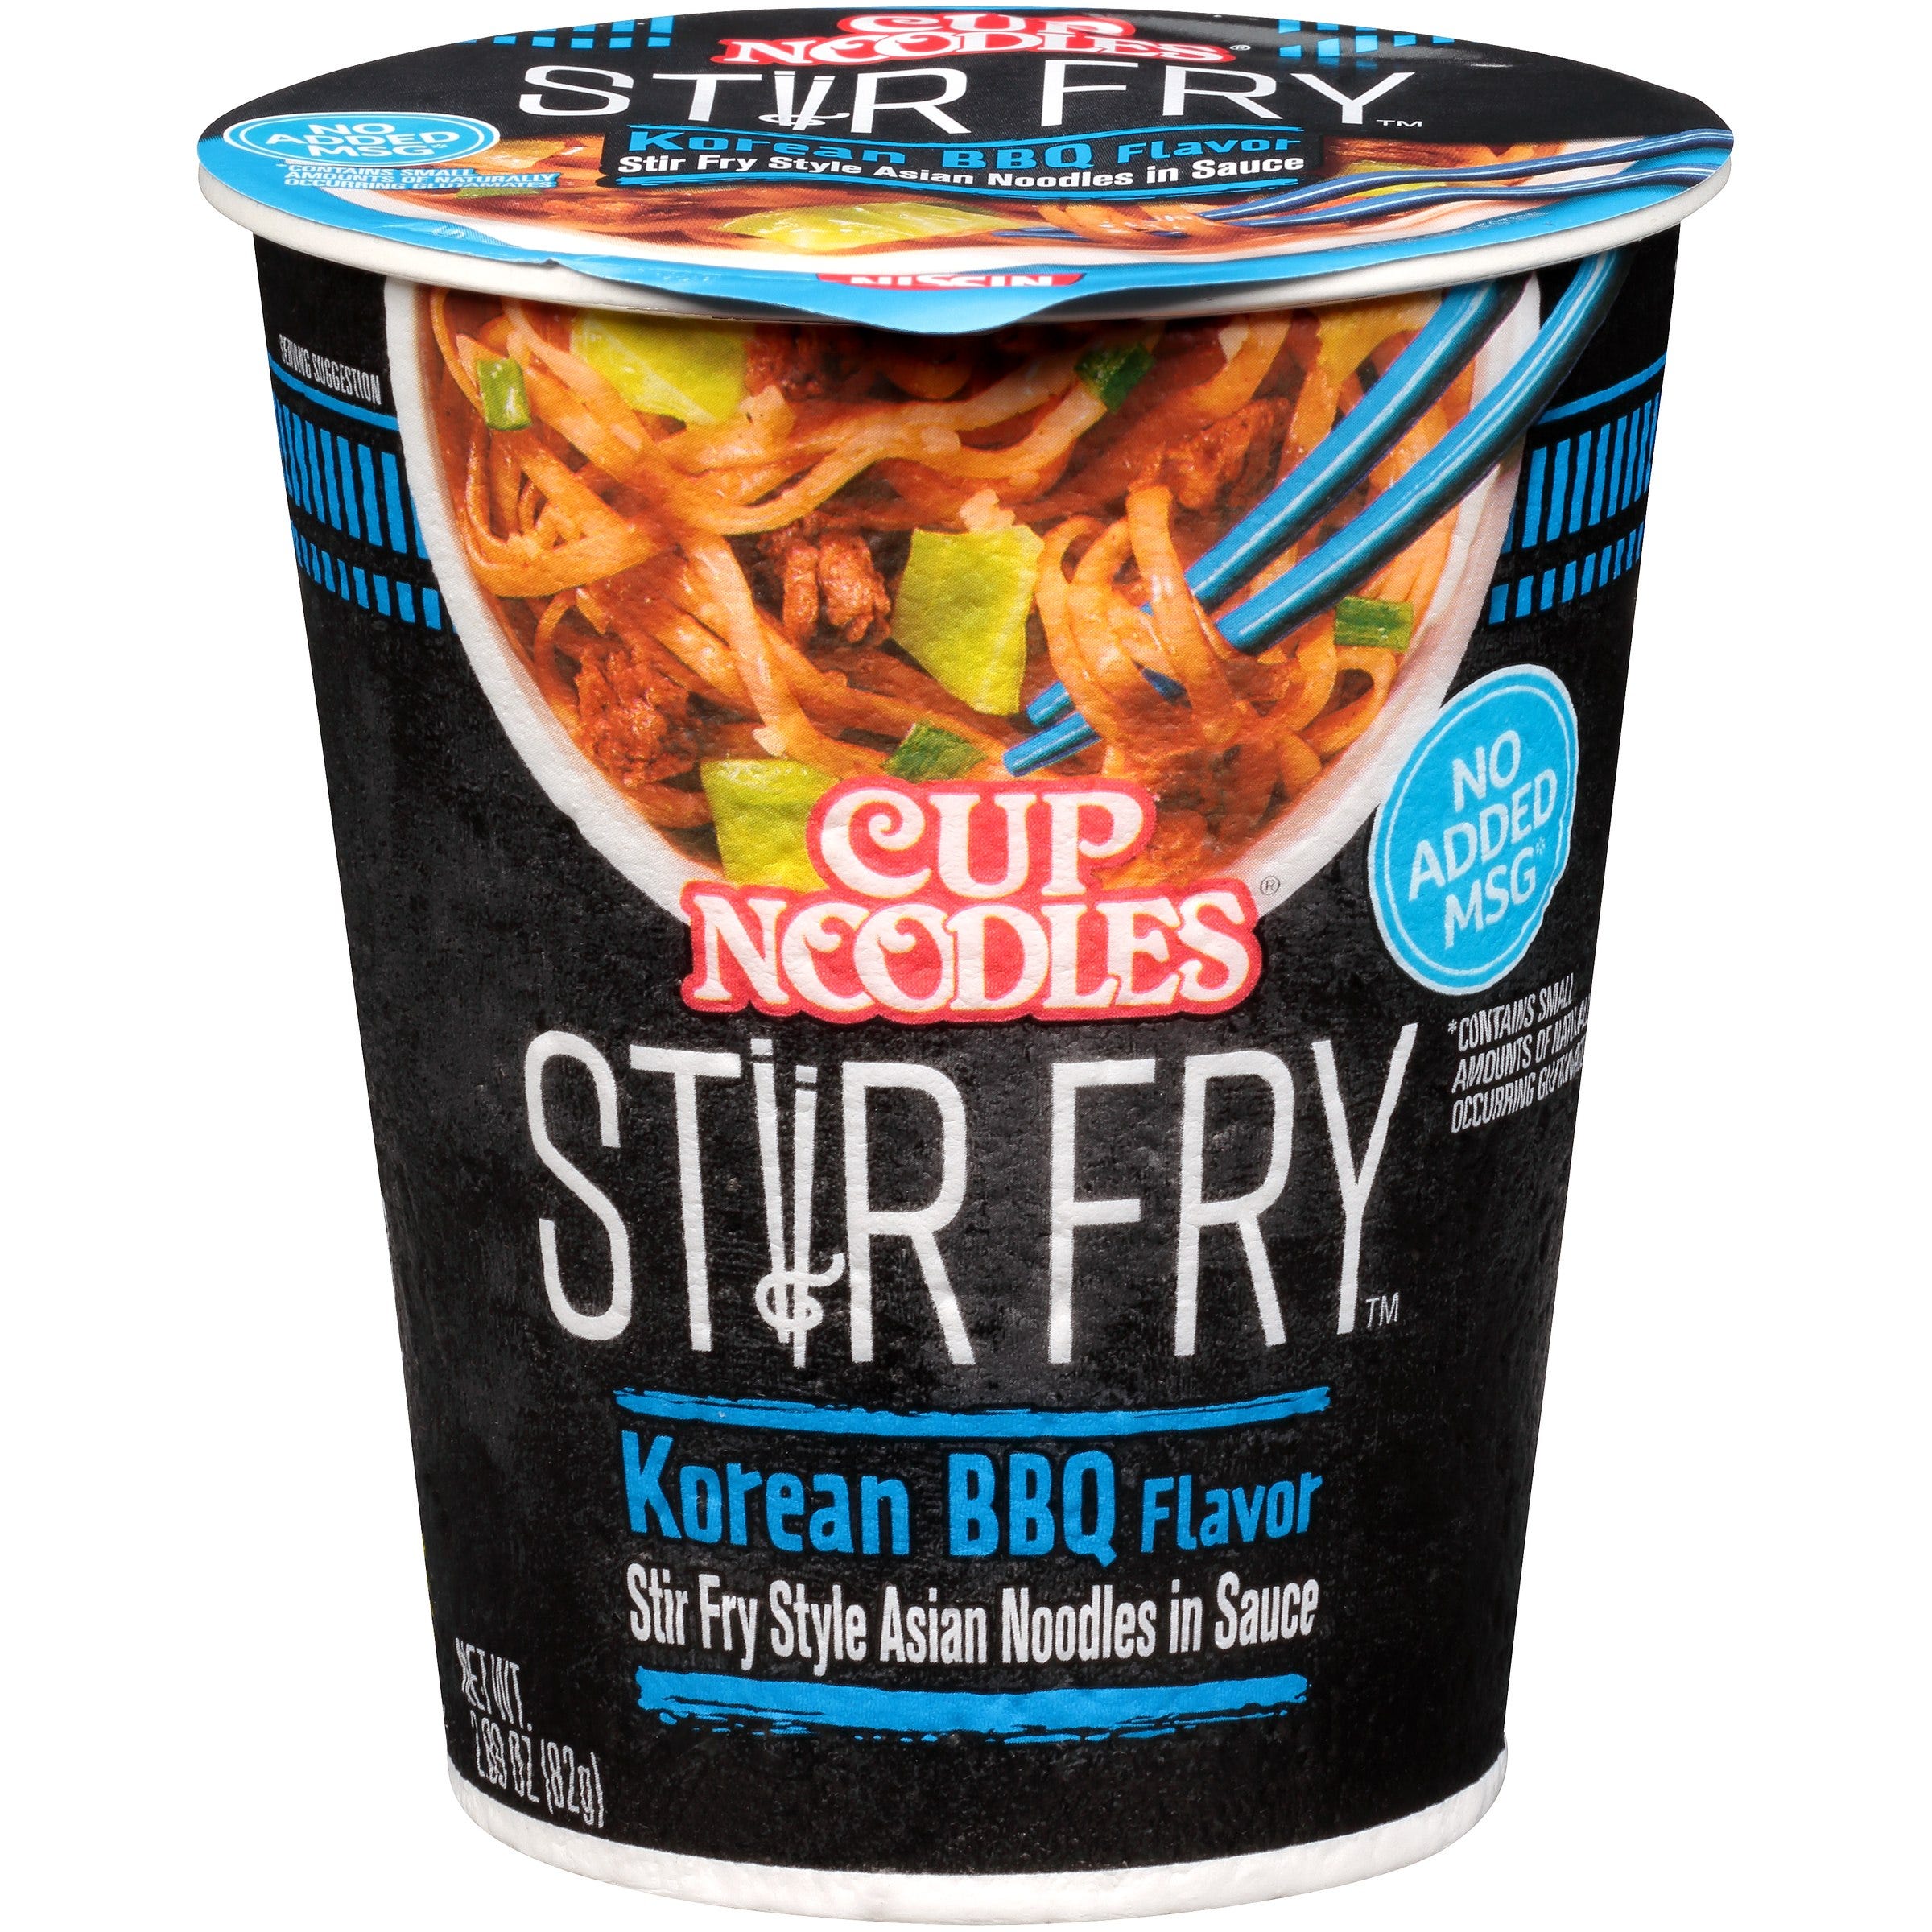 Nissin Cup Noodles Stir Fry, Korean BBQ - 2.89 oz